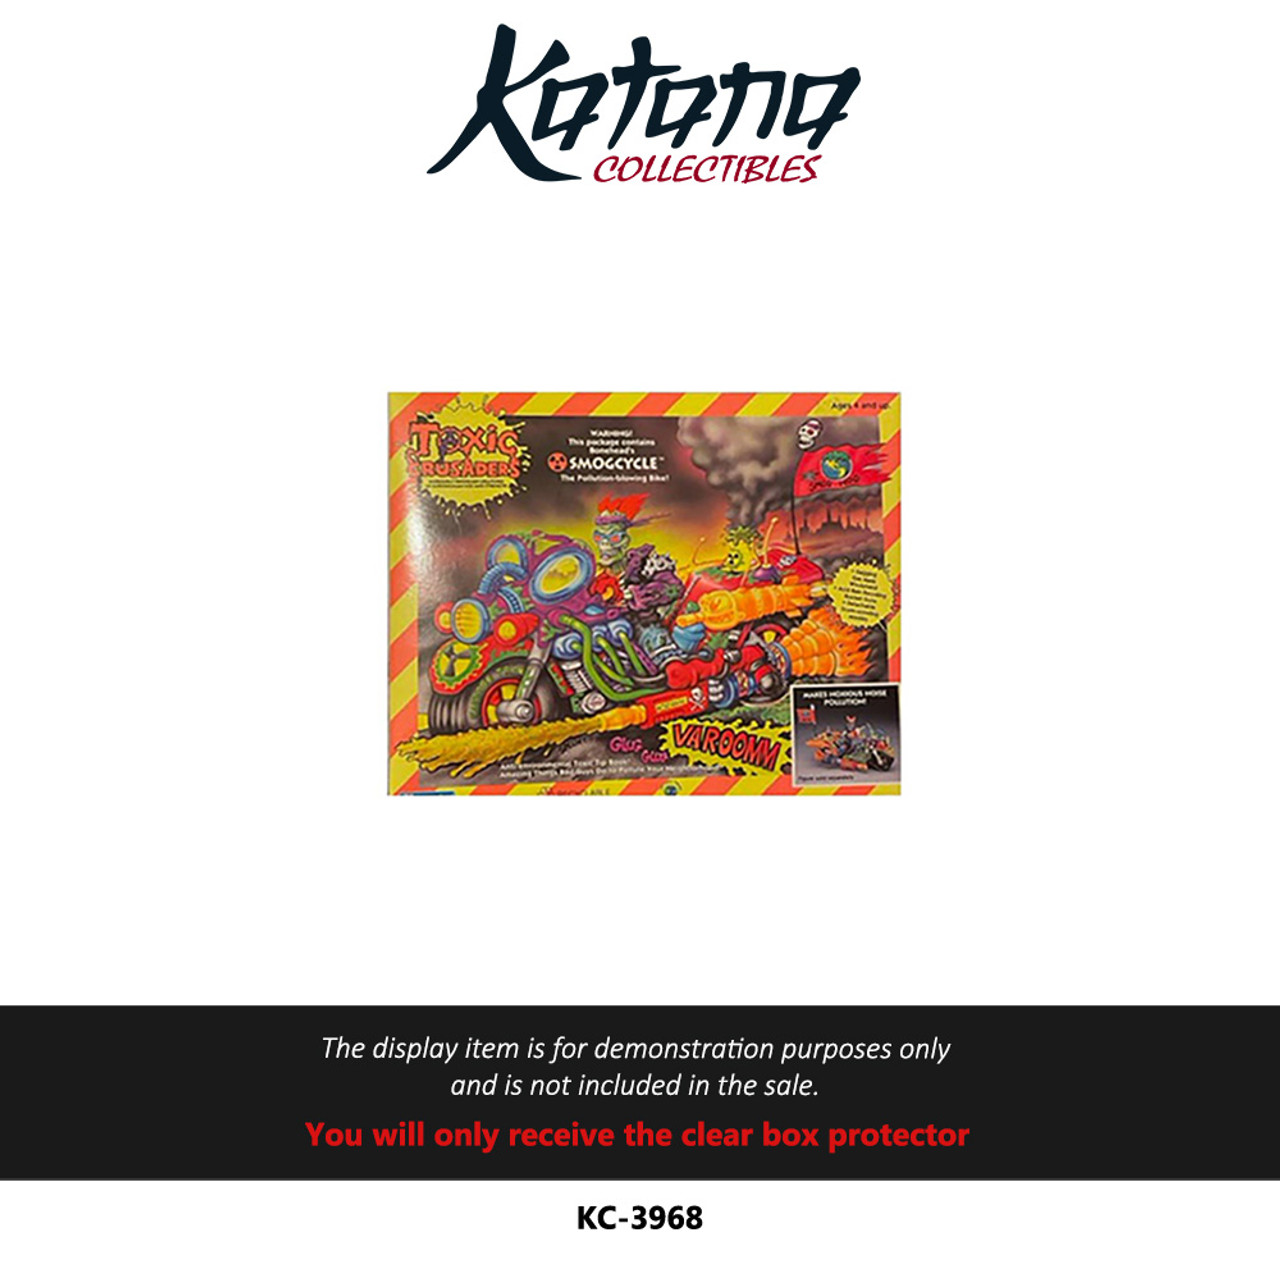 Katana Collectibles Protector For Playmates Toxic Crusaders Smogcycle